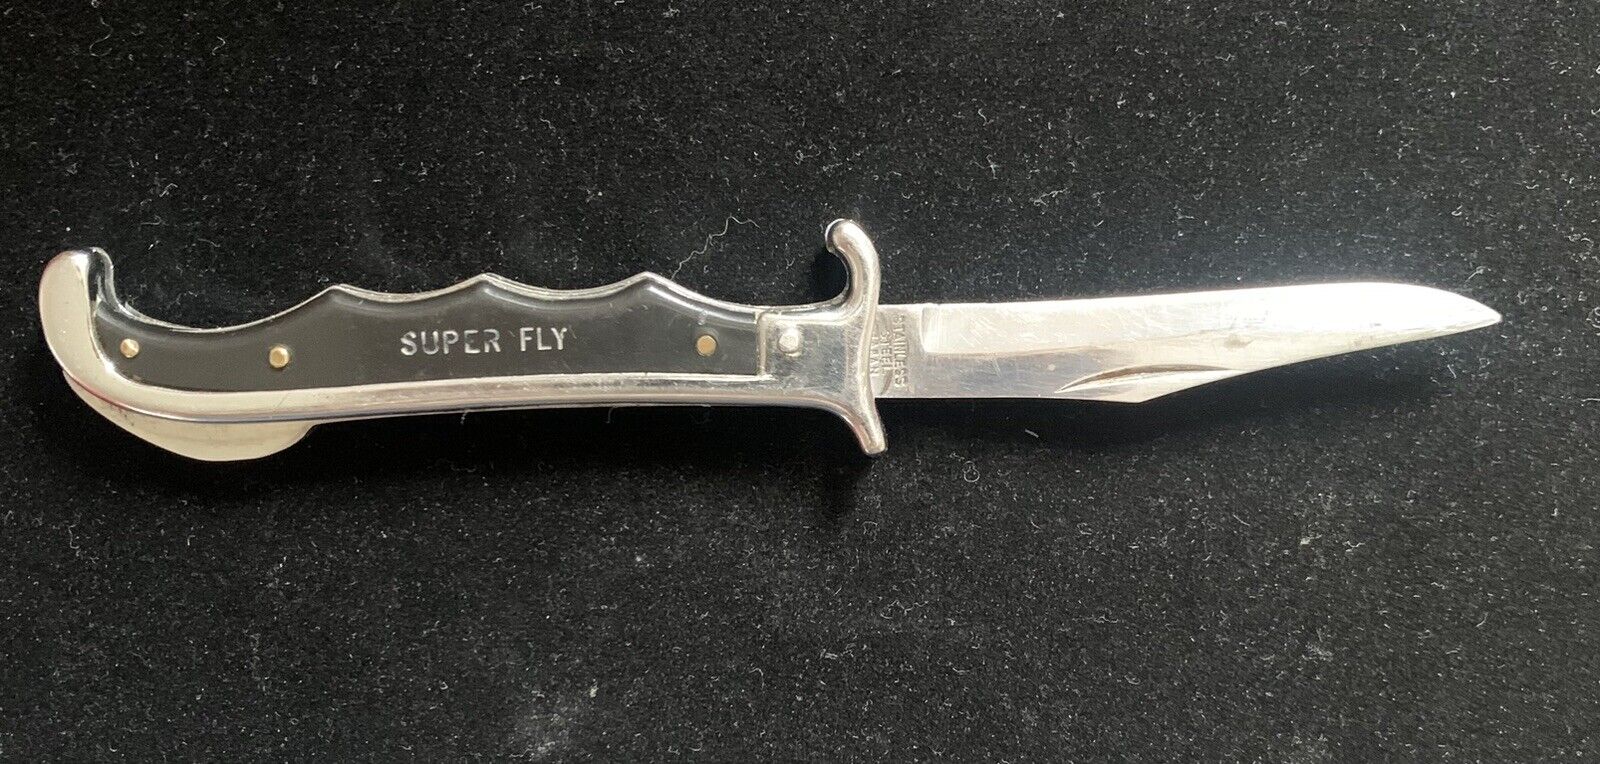 RARE VINTAGE SUPER FLY STILETTO FOLDING POCKET KNIFE